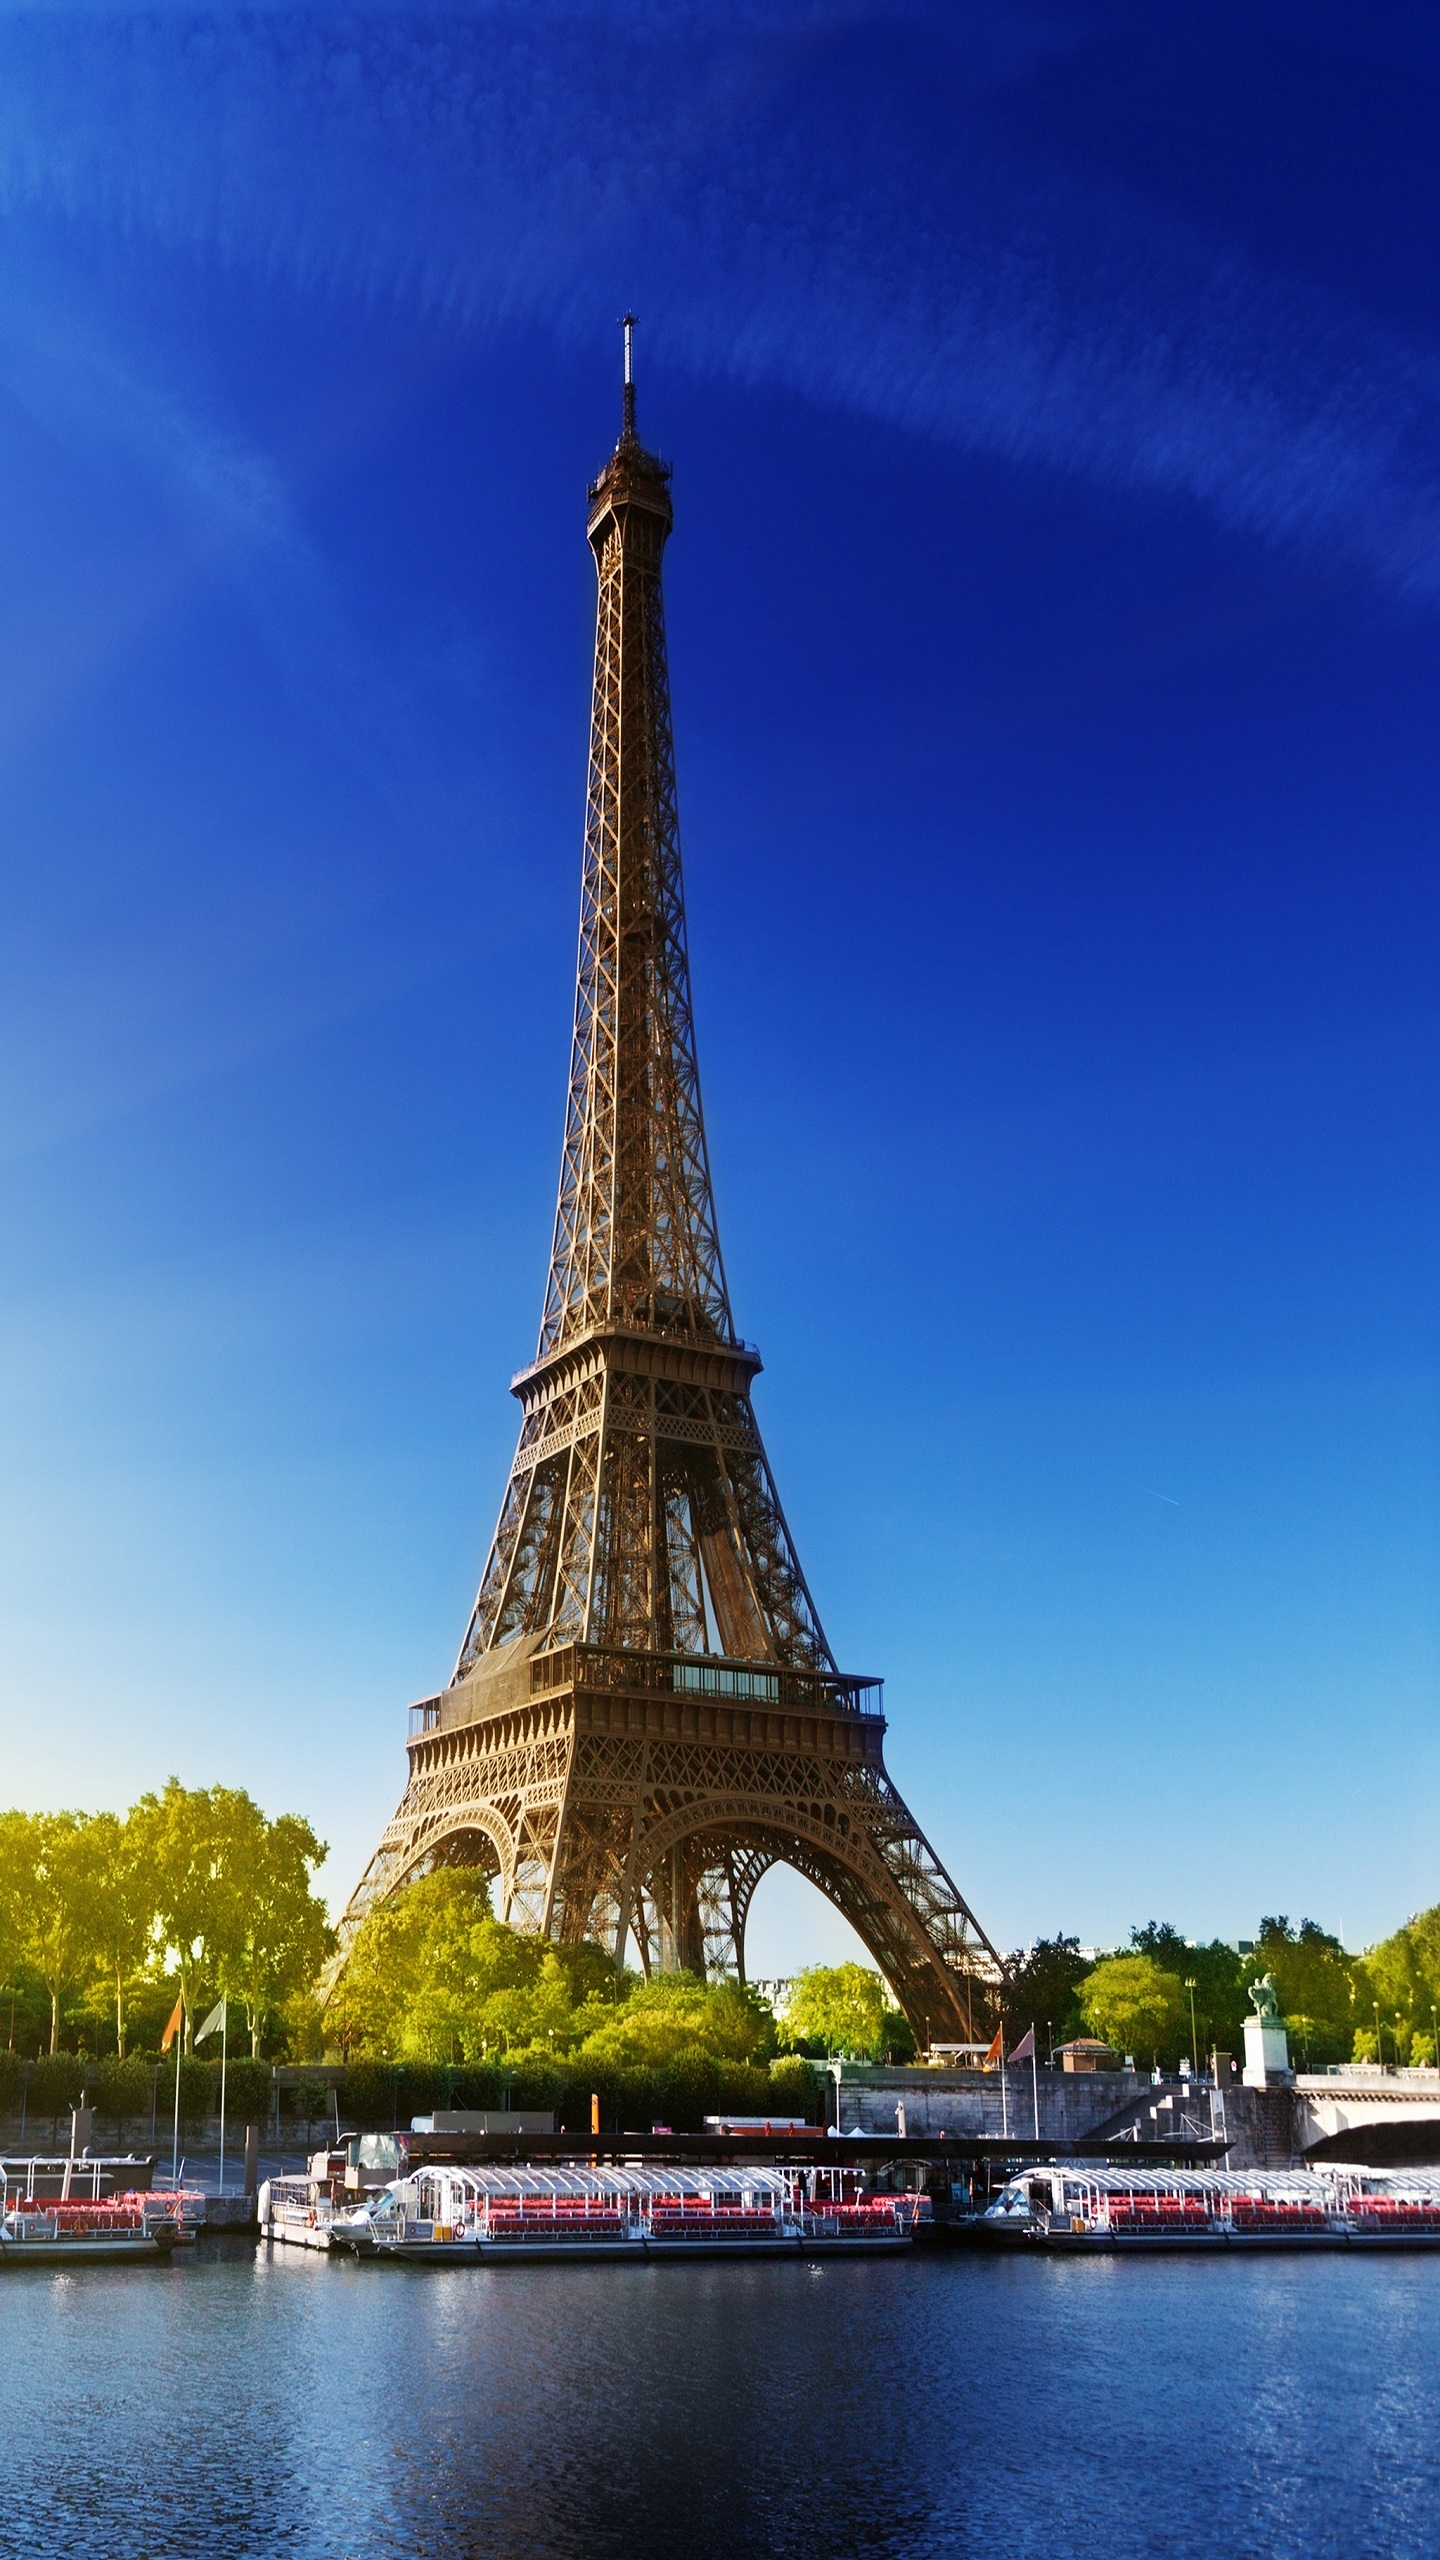 Eiffel Tower Paris for Samsung S7 & S7 Edge resolution